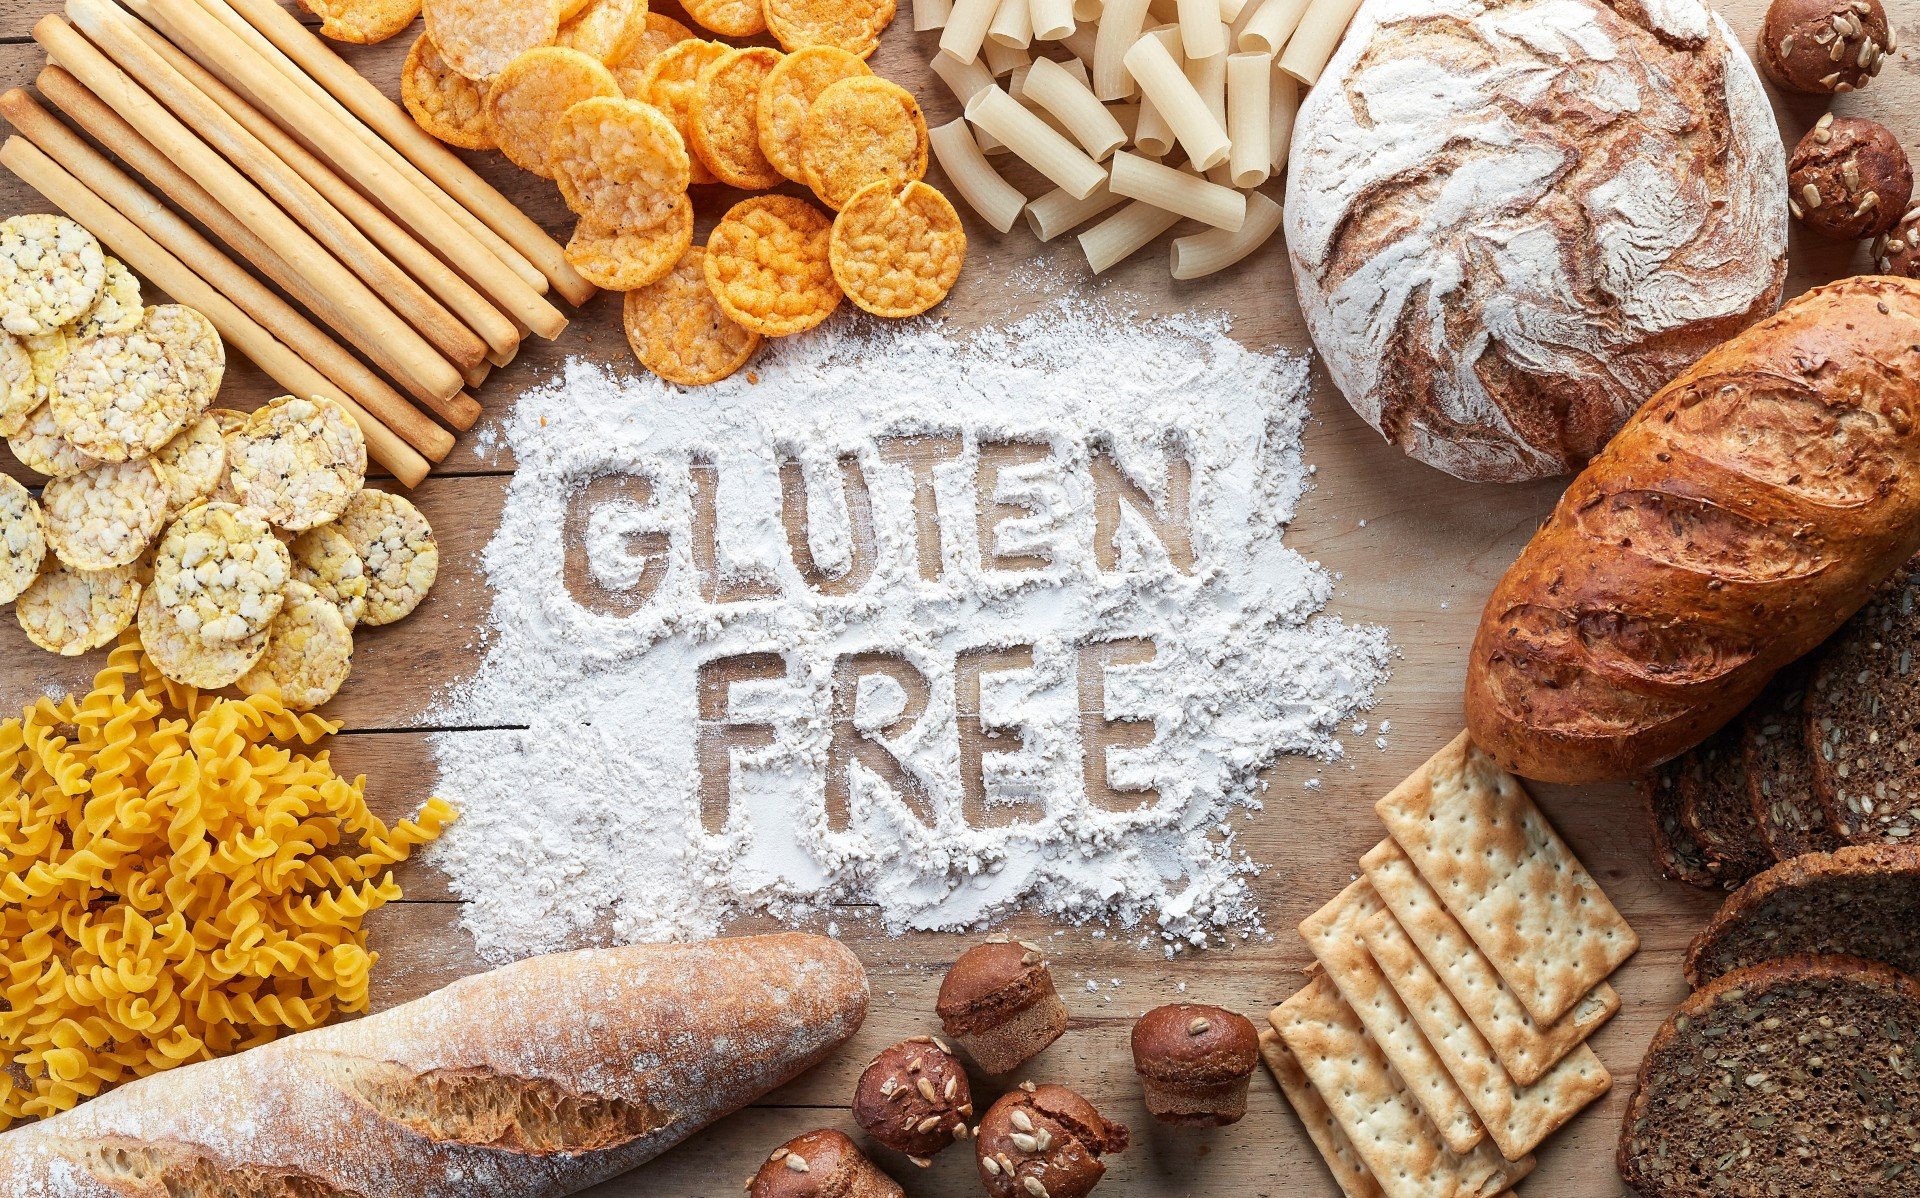 Celiac Disease and the Gluten